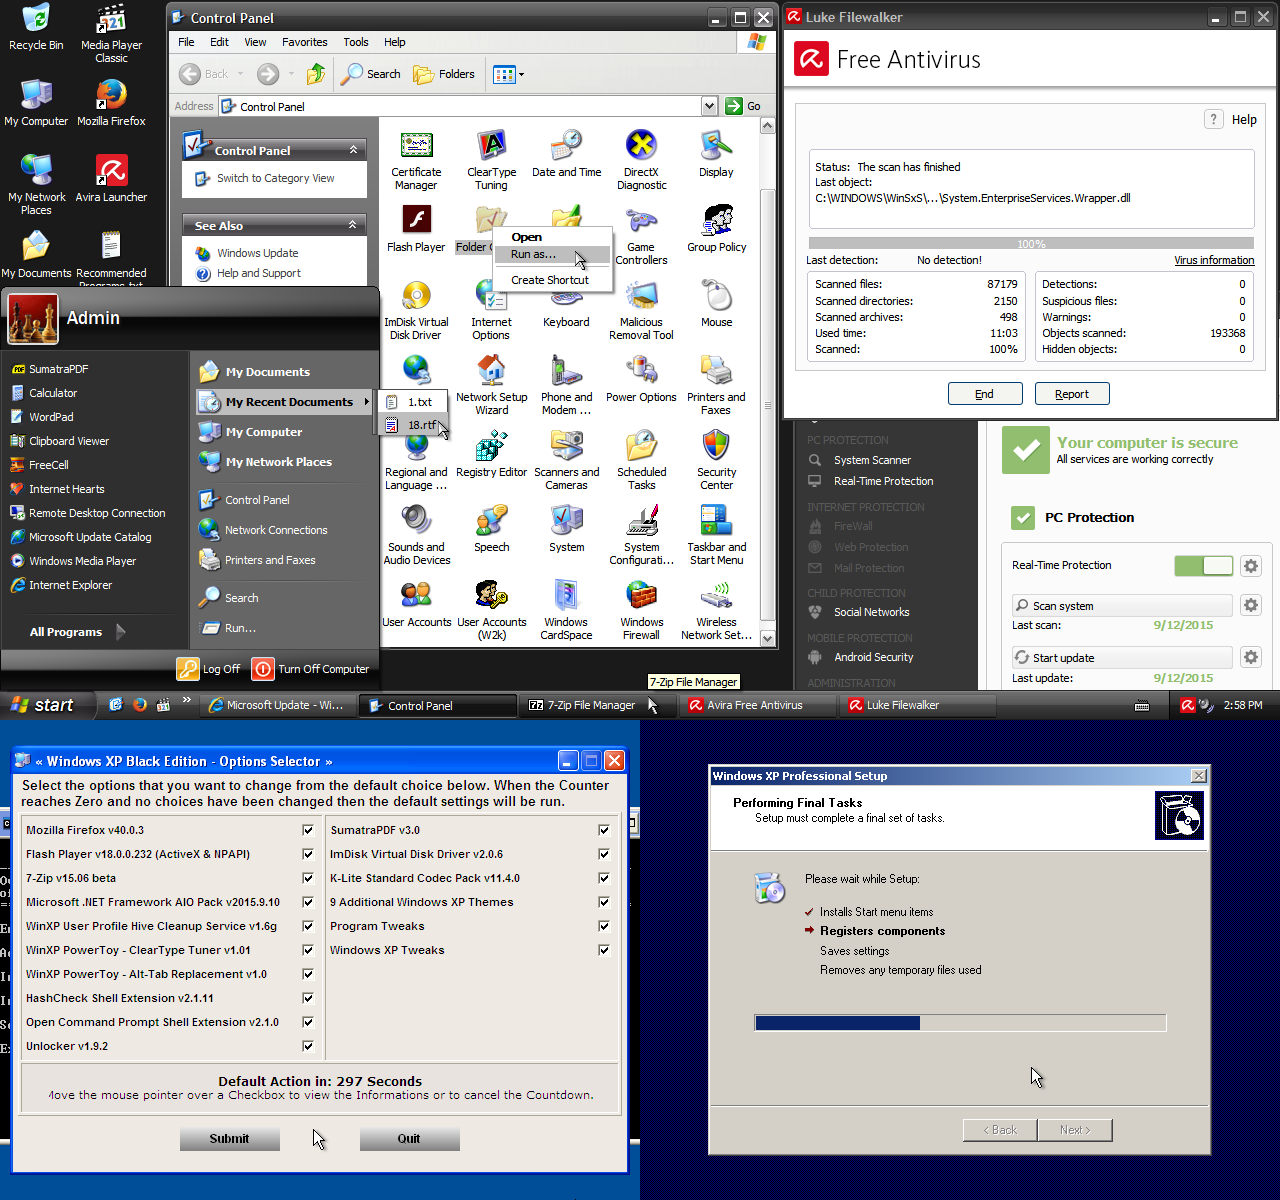 Windows 7 Lite X86 Pt-br Iso Download